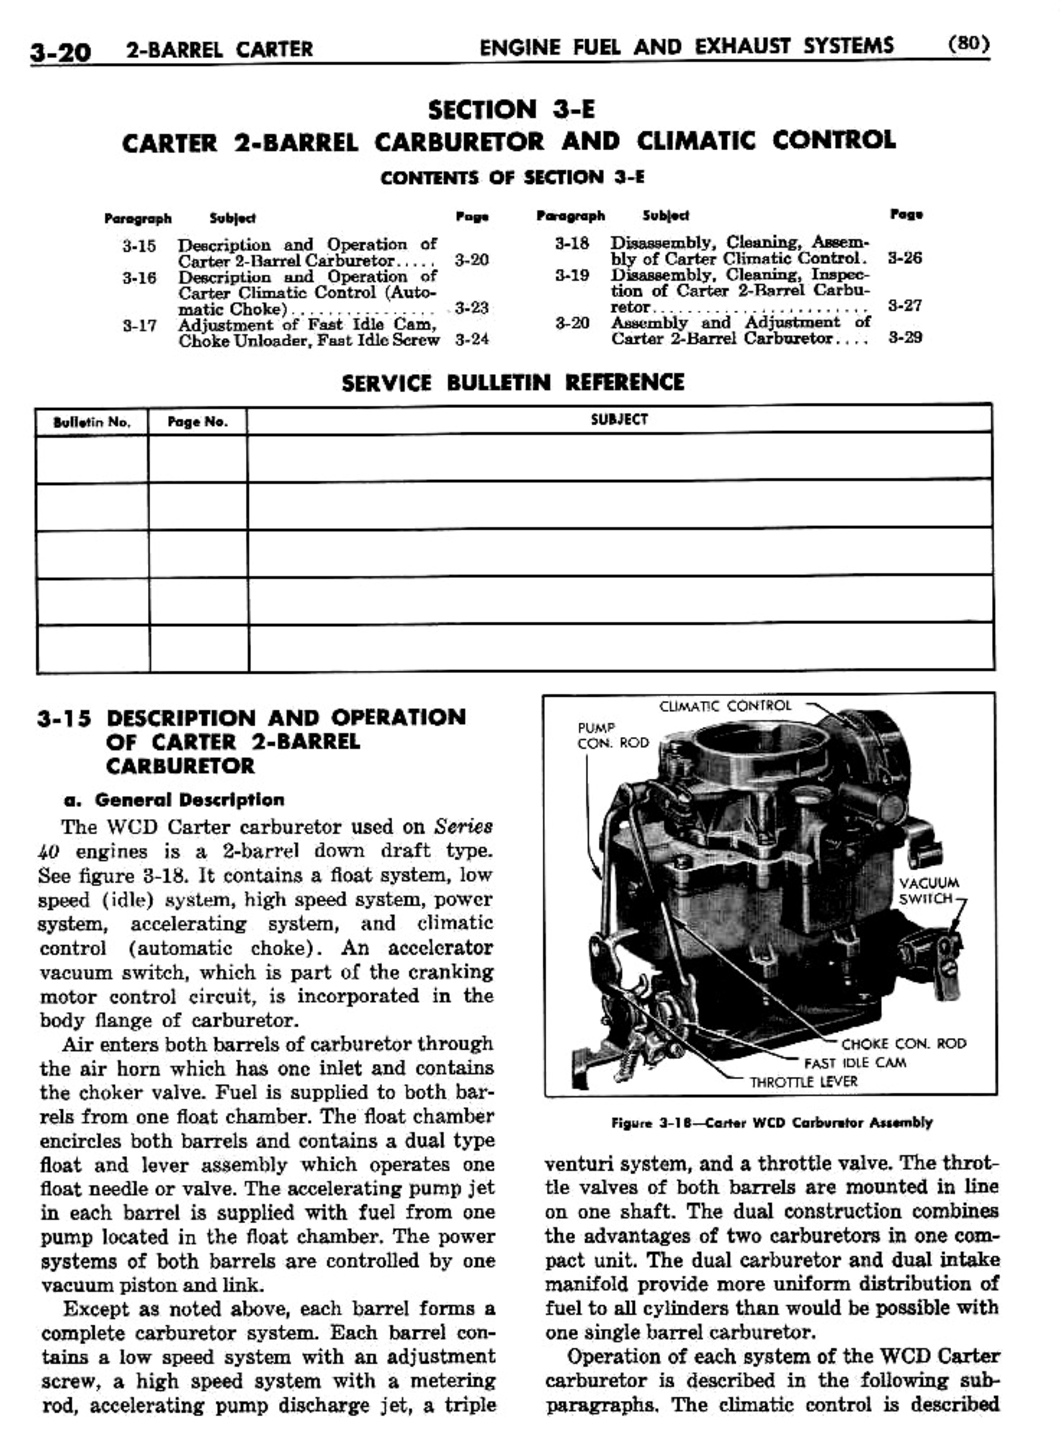 n_04 1955 Buick Shop Manual - Engine Fuel & Exhaust-020-020.jpg